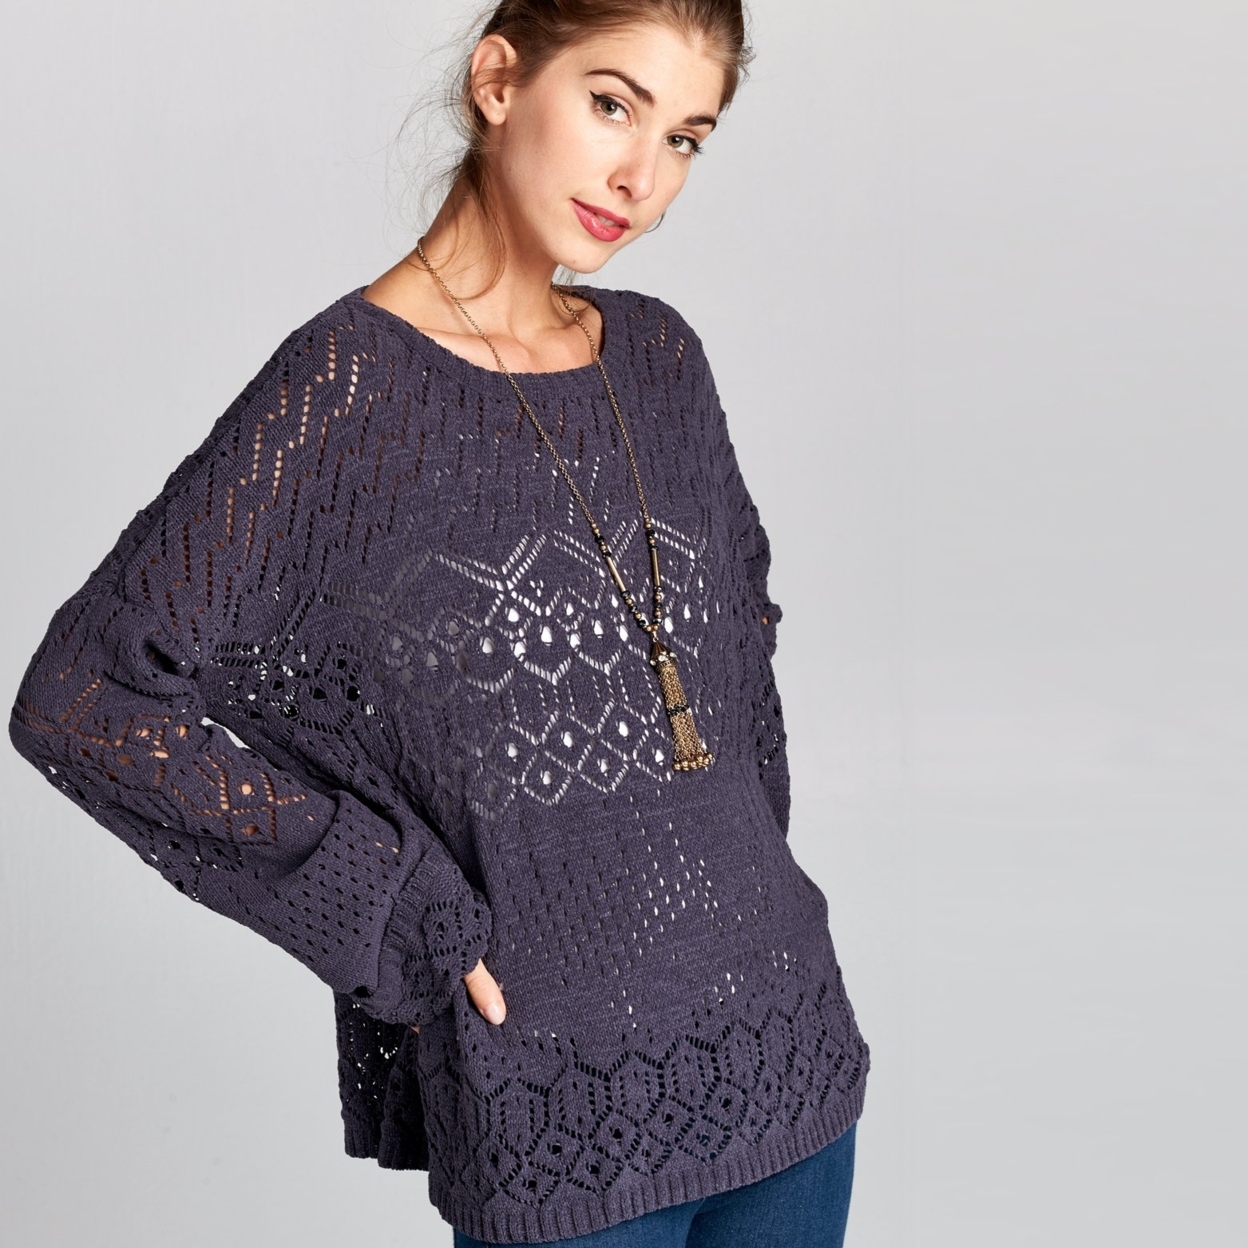 Crochet Knit Sweater - Charcoal, Medium (8-10)